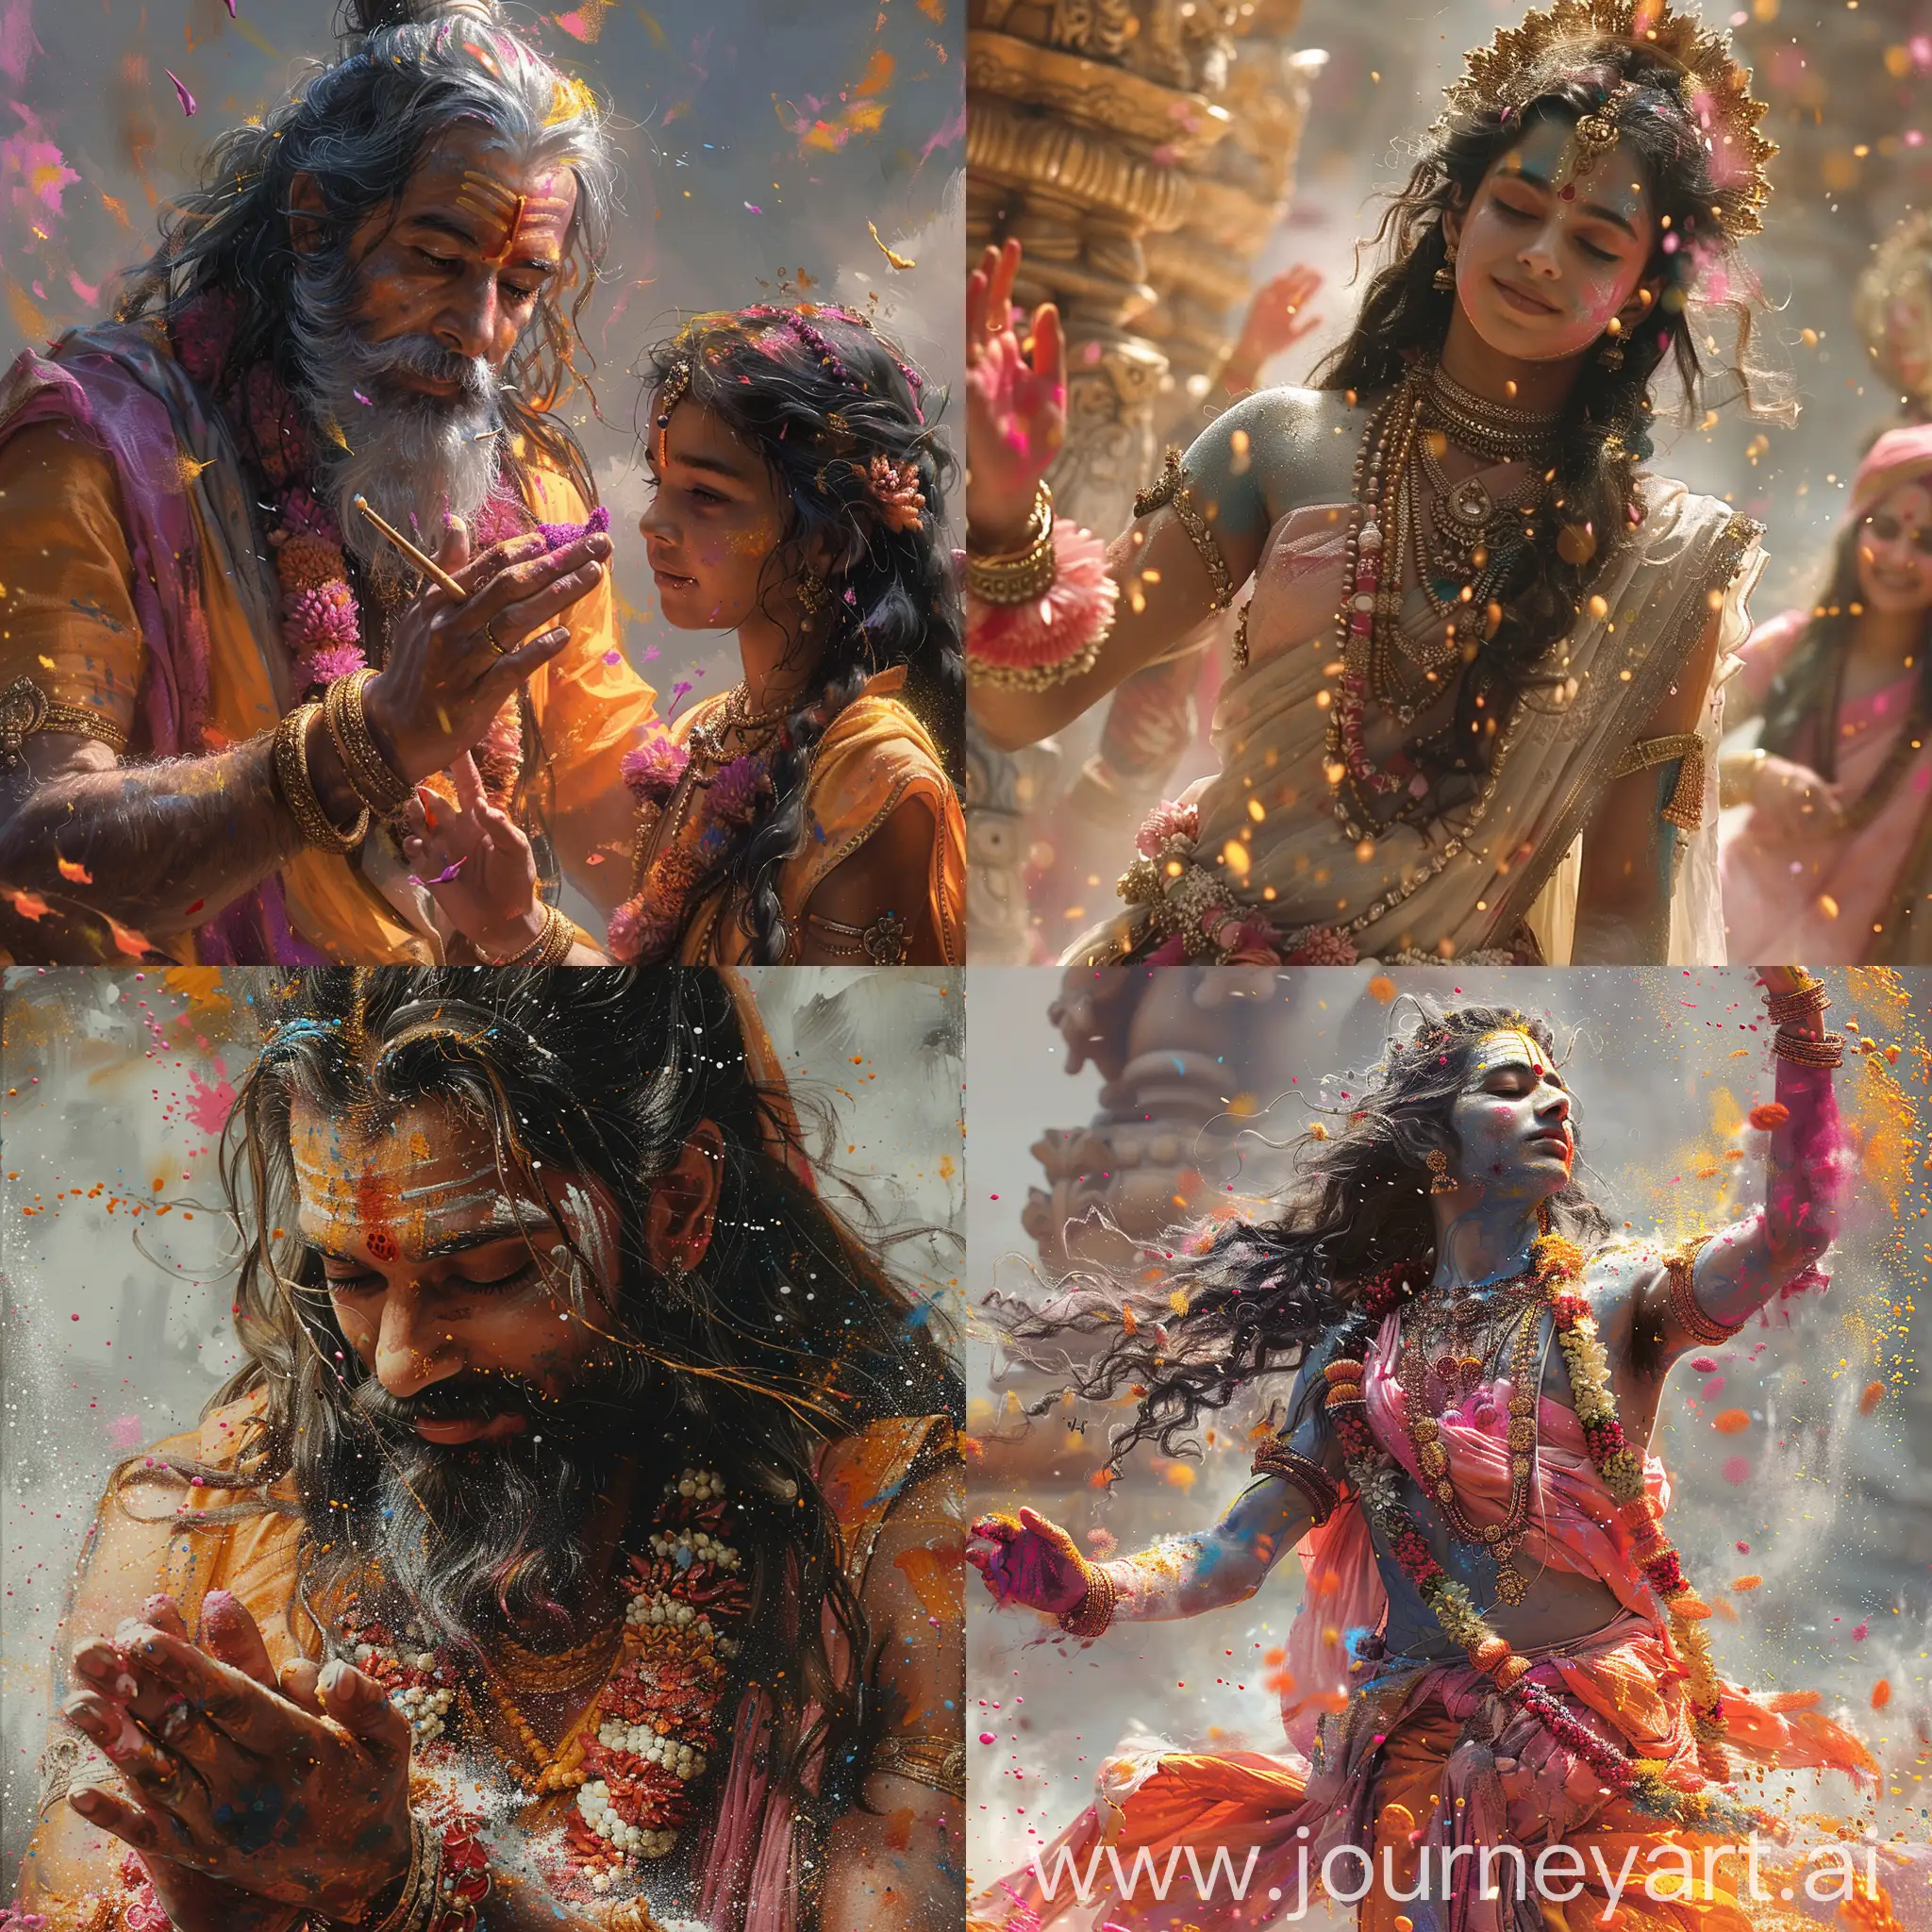 Spiritual-Holi-Celebration-with-Indian-God-Mahadev-and-Joyful-Dancing-Girl